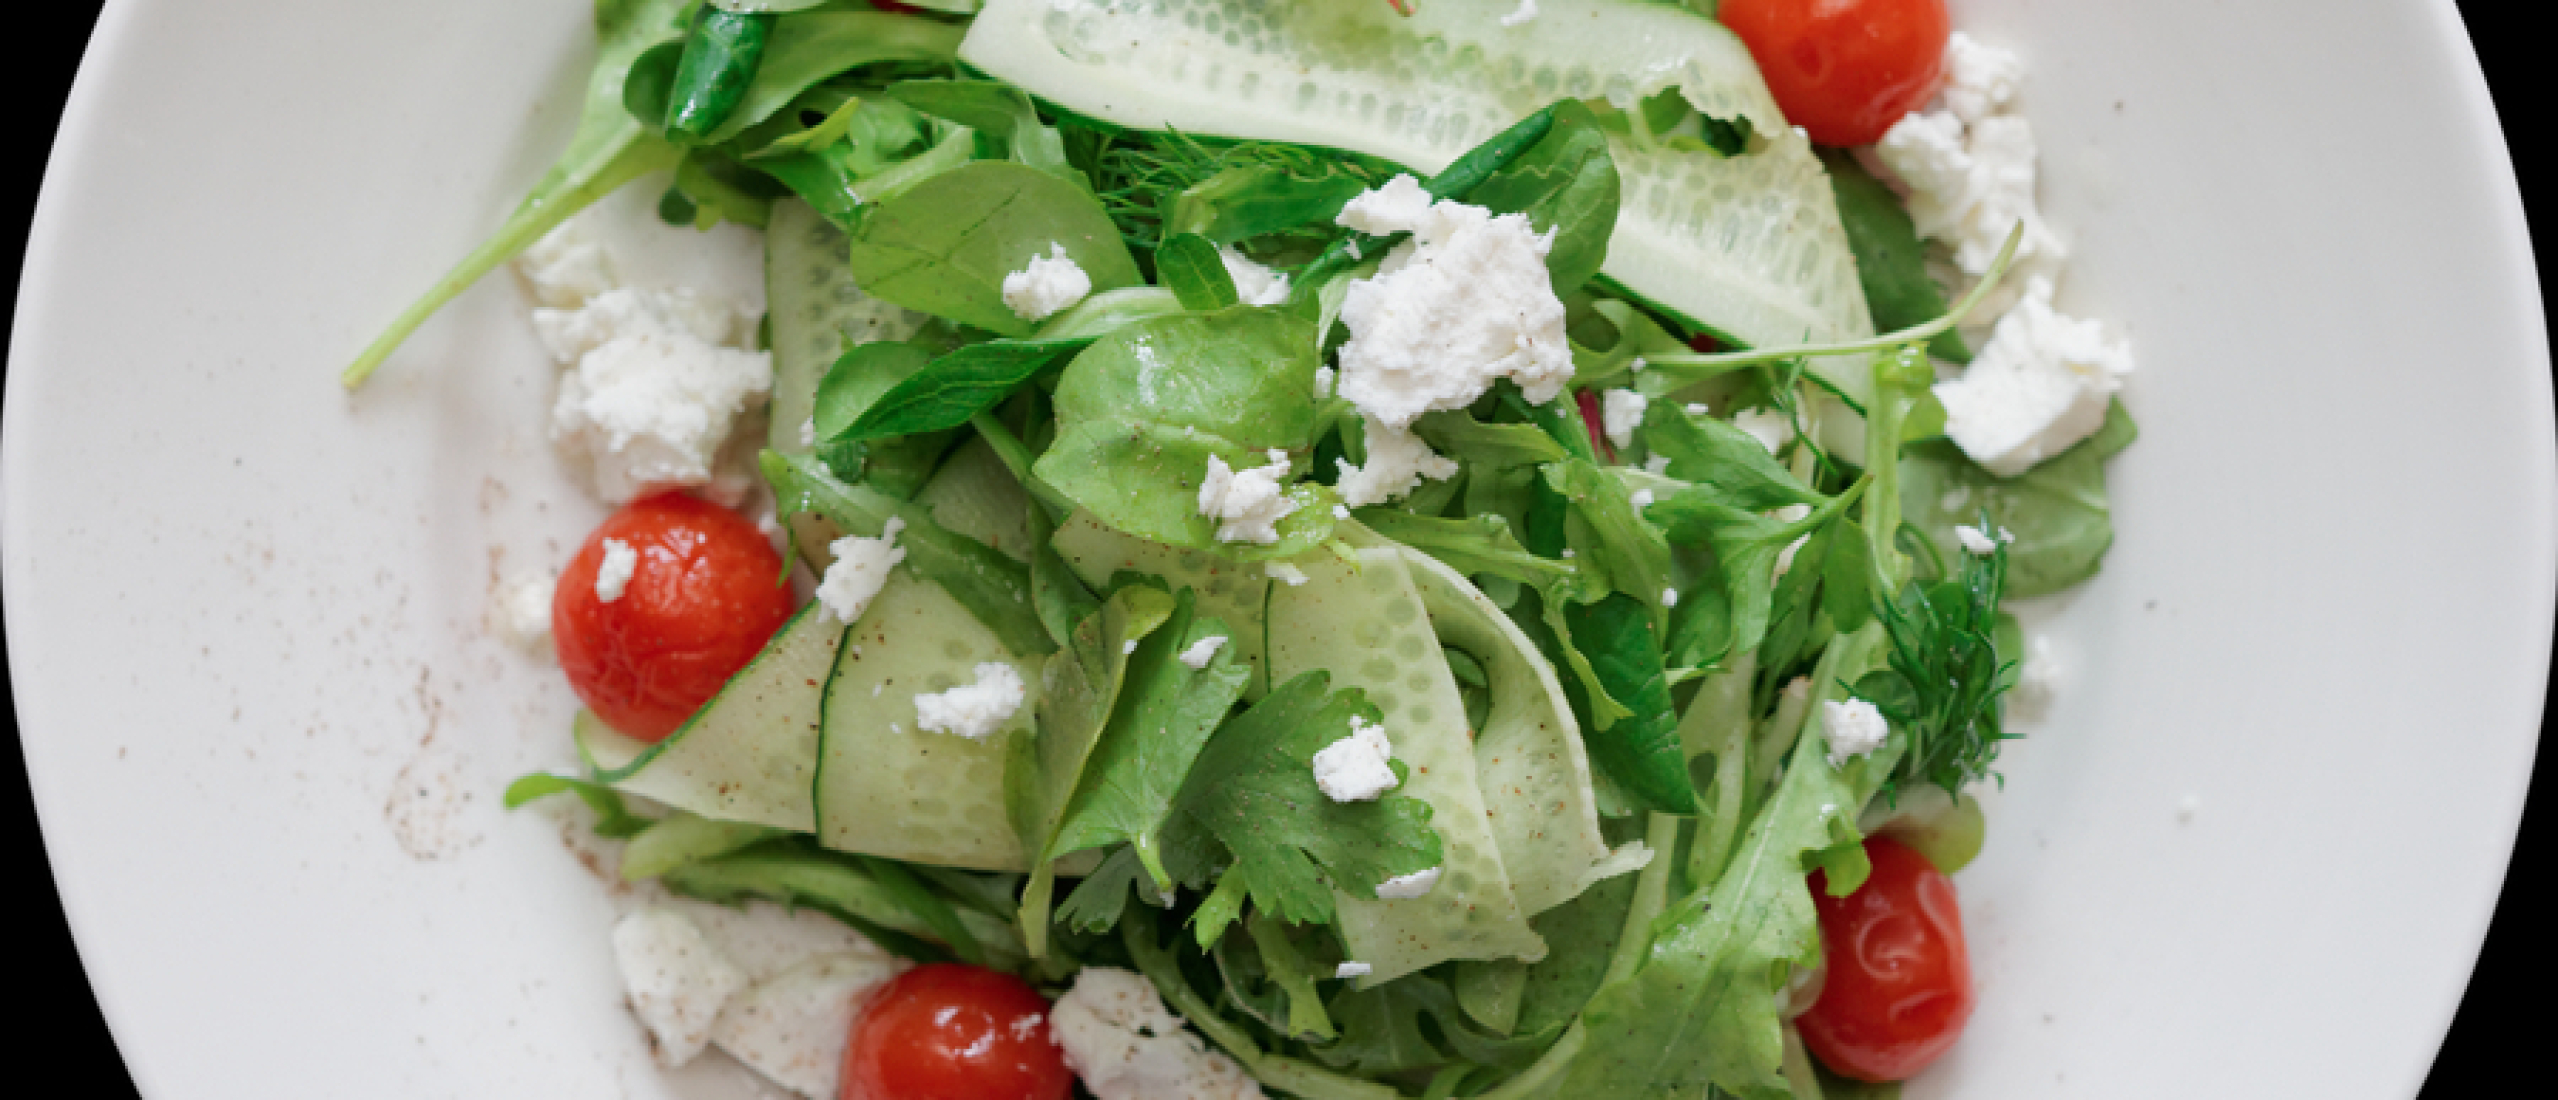 Recept simpele gezonde salade